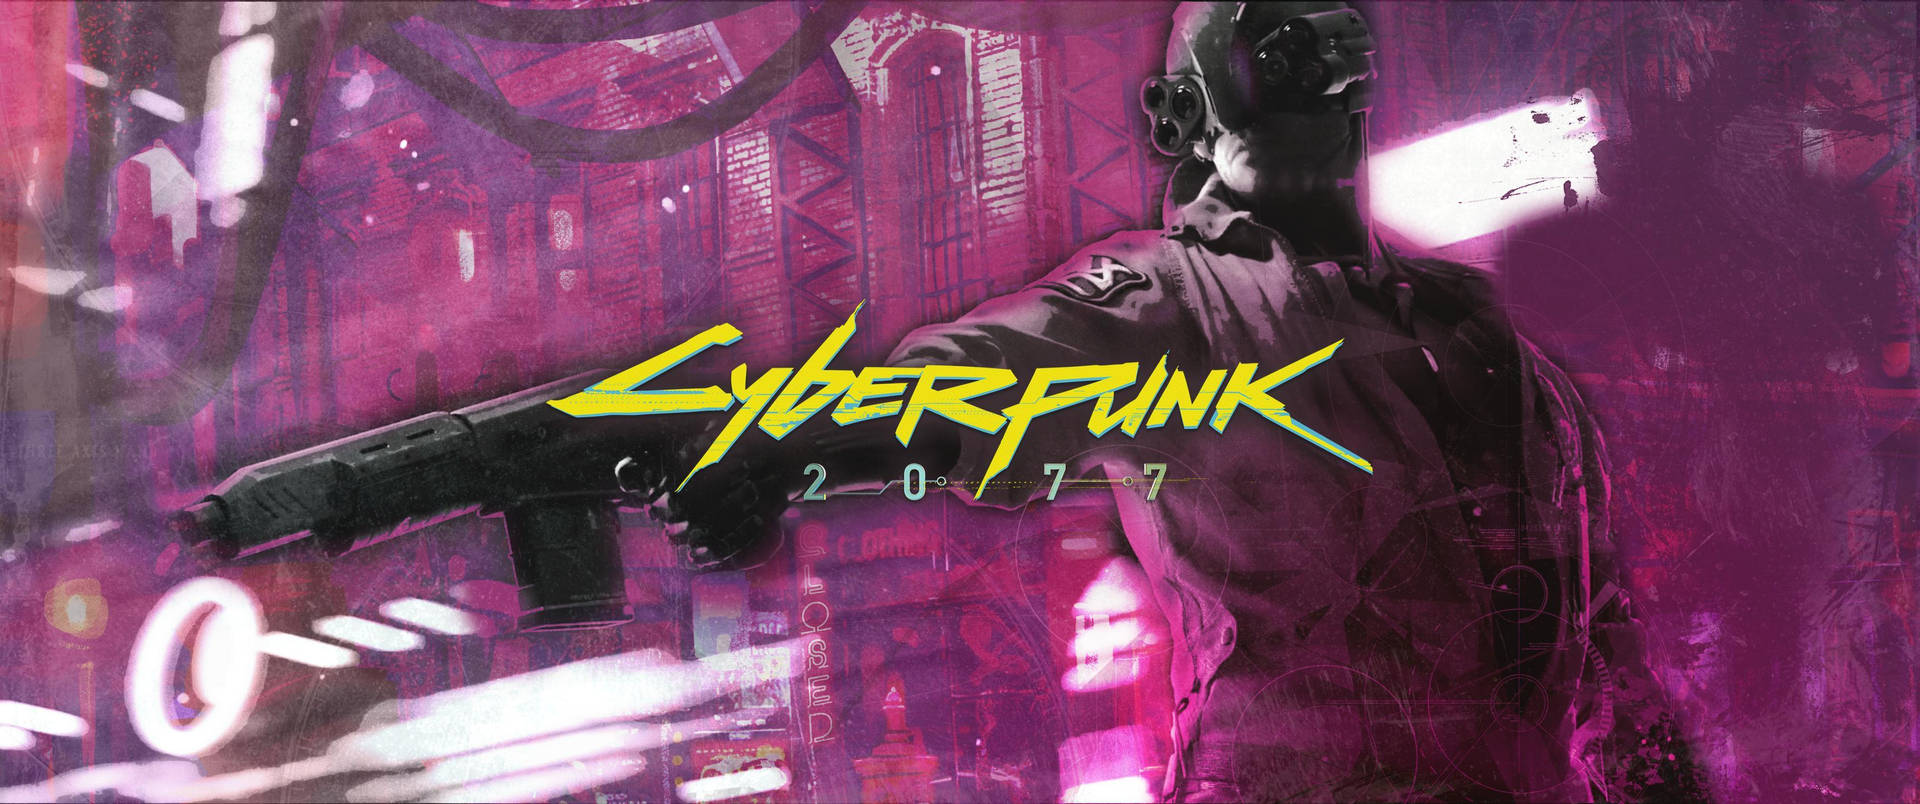 Cyberpunk 2077 3440X1440 Wallpaper and Background Image